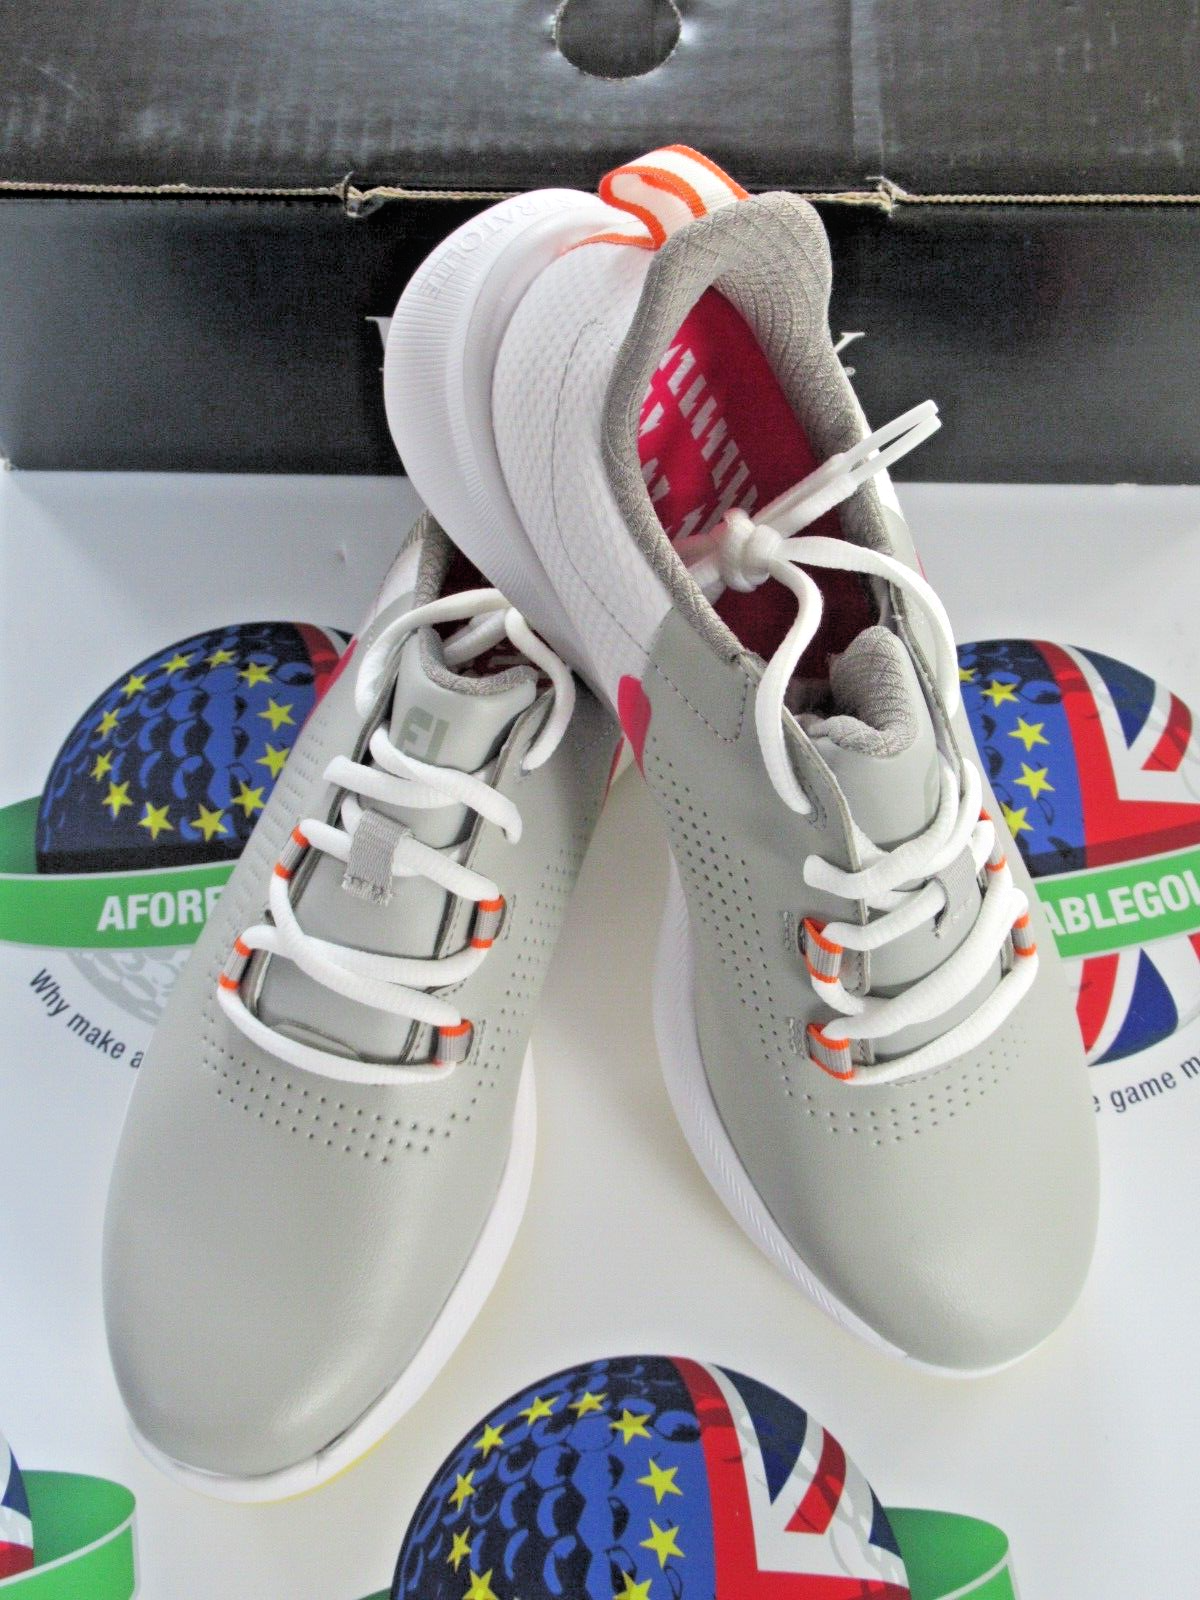 footjoy fuel womens golf shoes grey/white 92372k uk size 6.5 medium